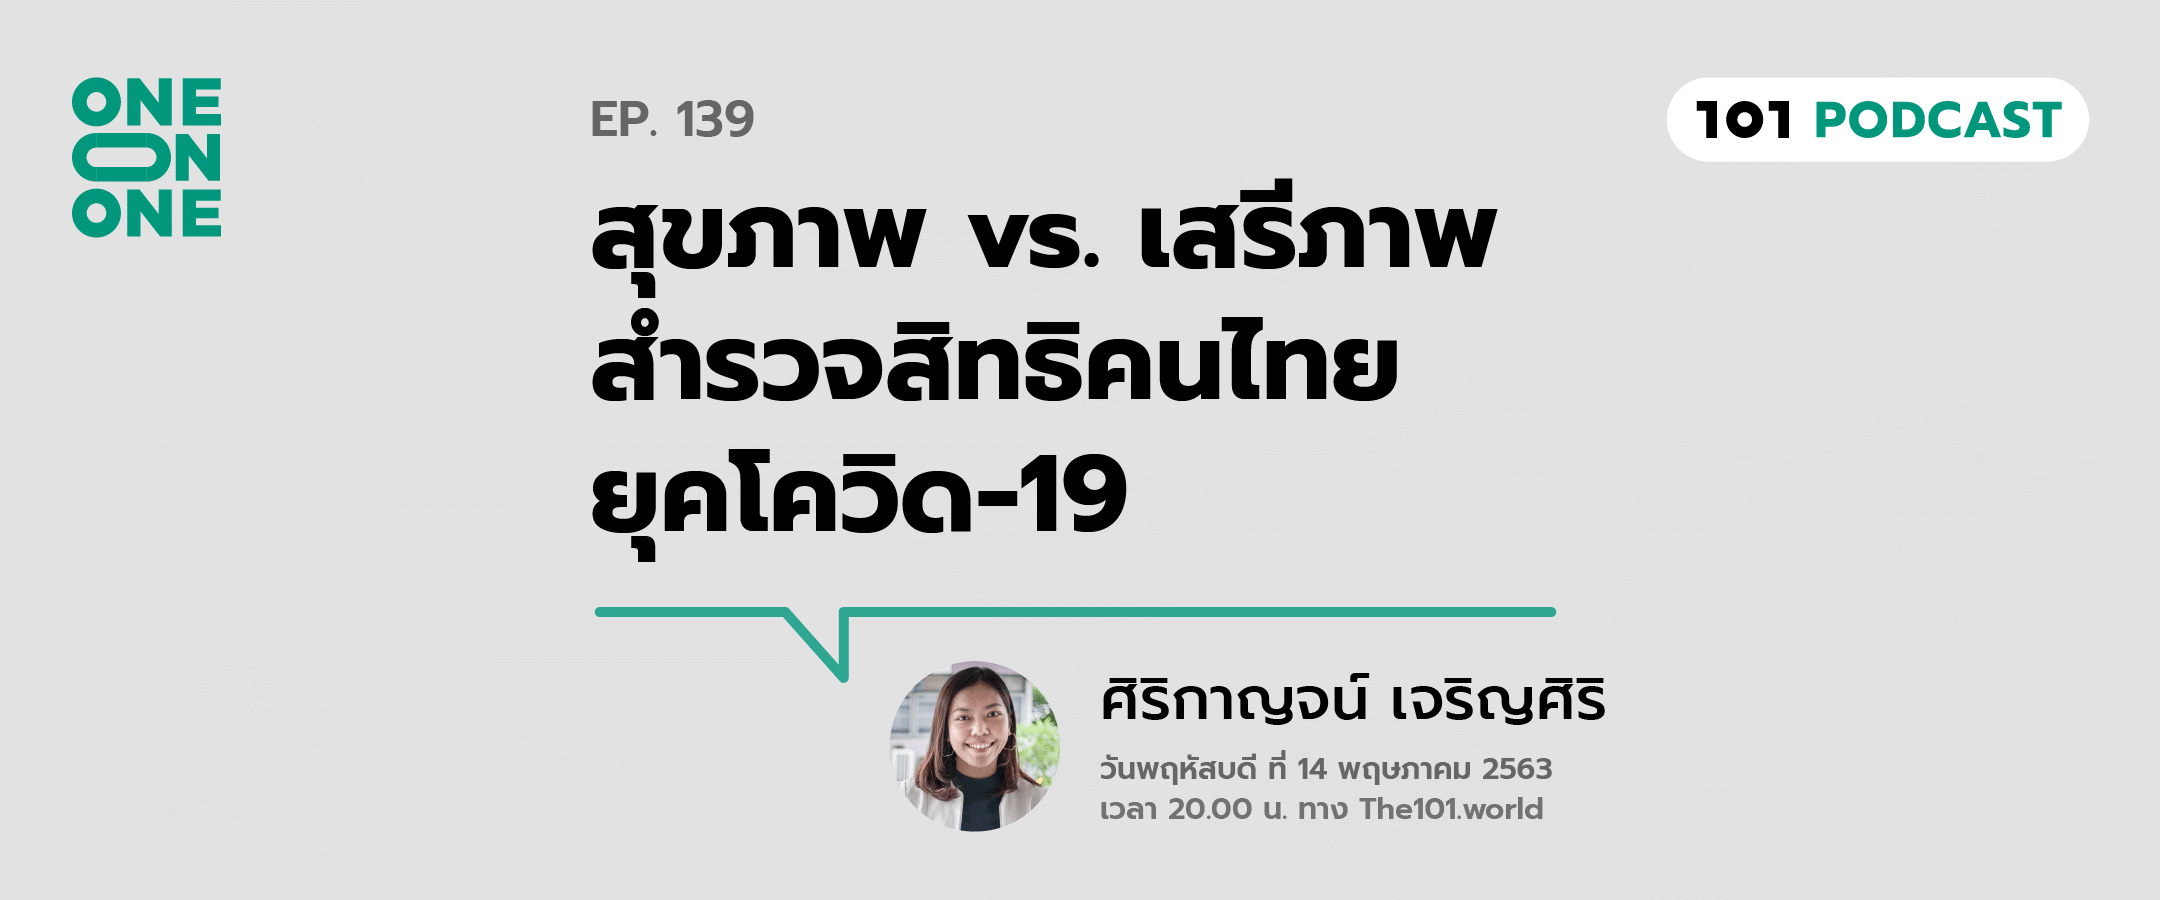 101 One-On-One Ep.139 : สุขภาพ vs. เสรีภาพ สำรวจสิทธิคนไทย ยุคโควิด-19